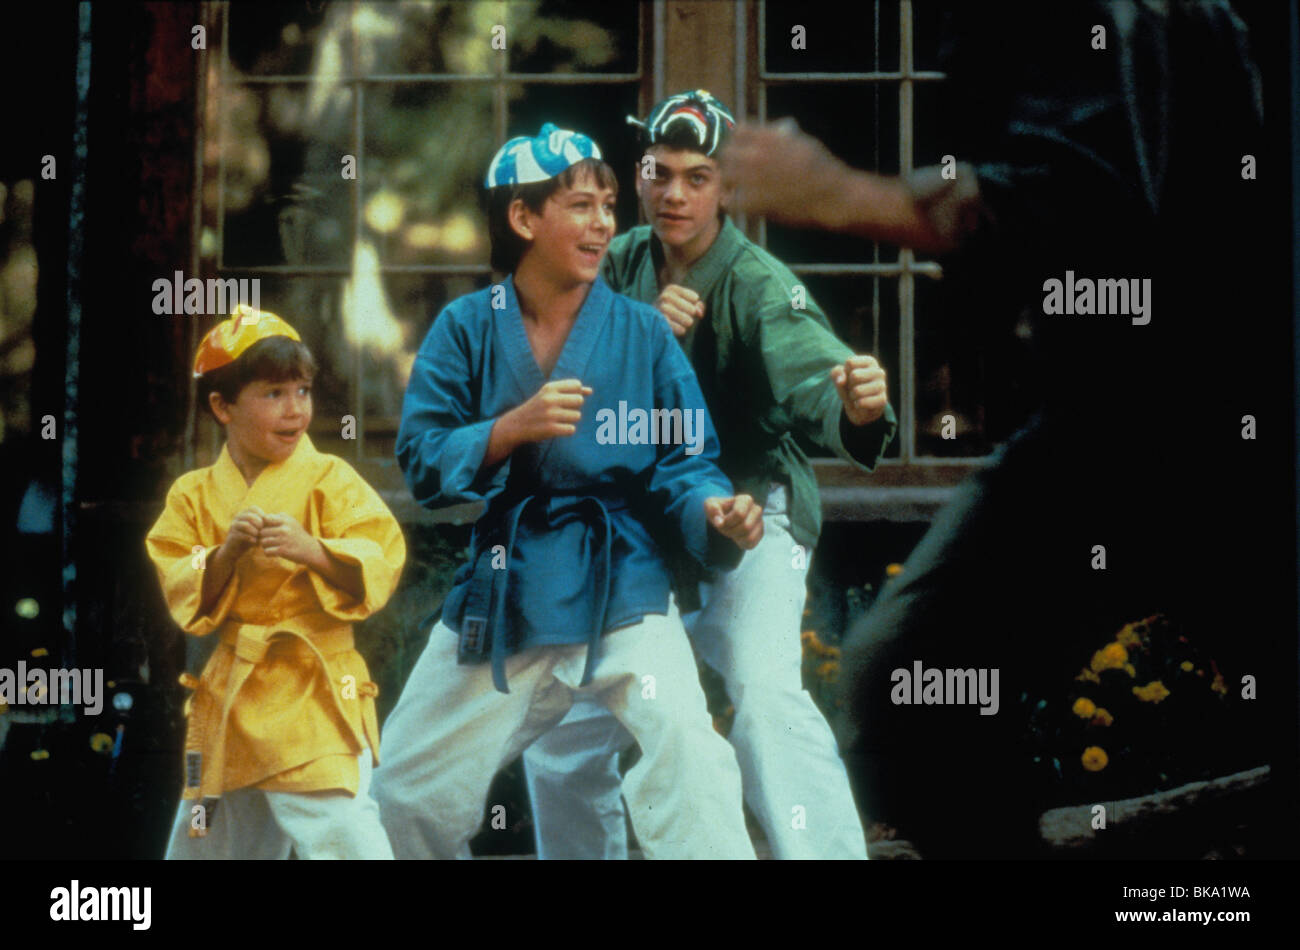 Three ninjas kick back 1994 evan bonifant hi-res stock photography and